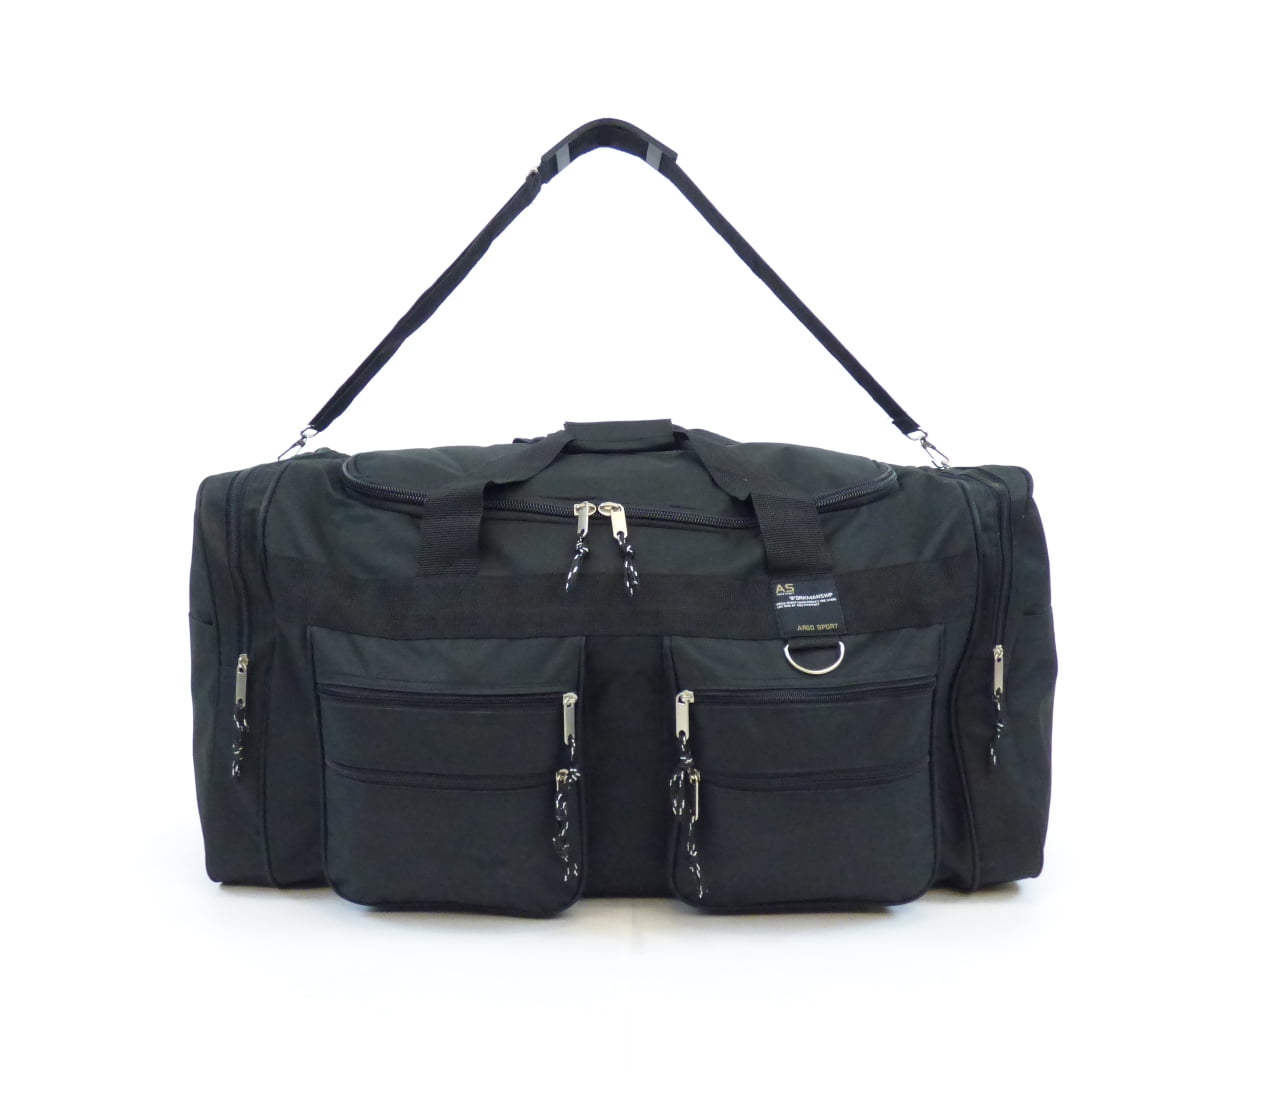 Dual-Tone 30 in. Black Duffel Bag with Shoulder Strap - Walmart.com